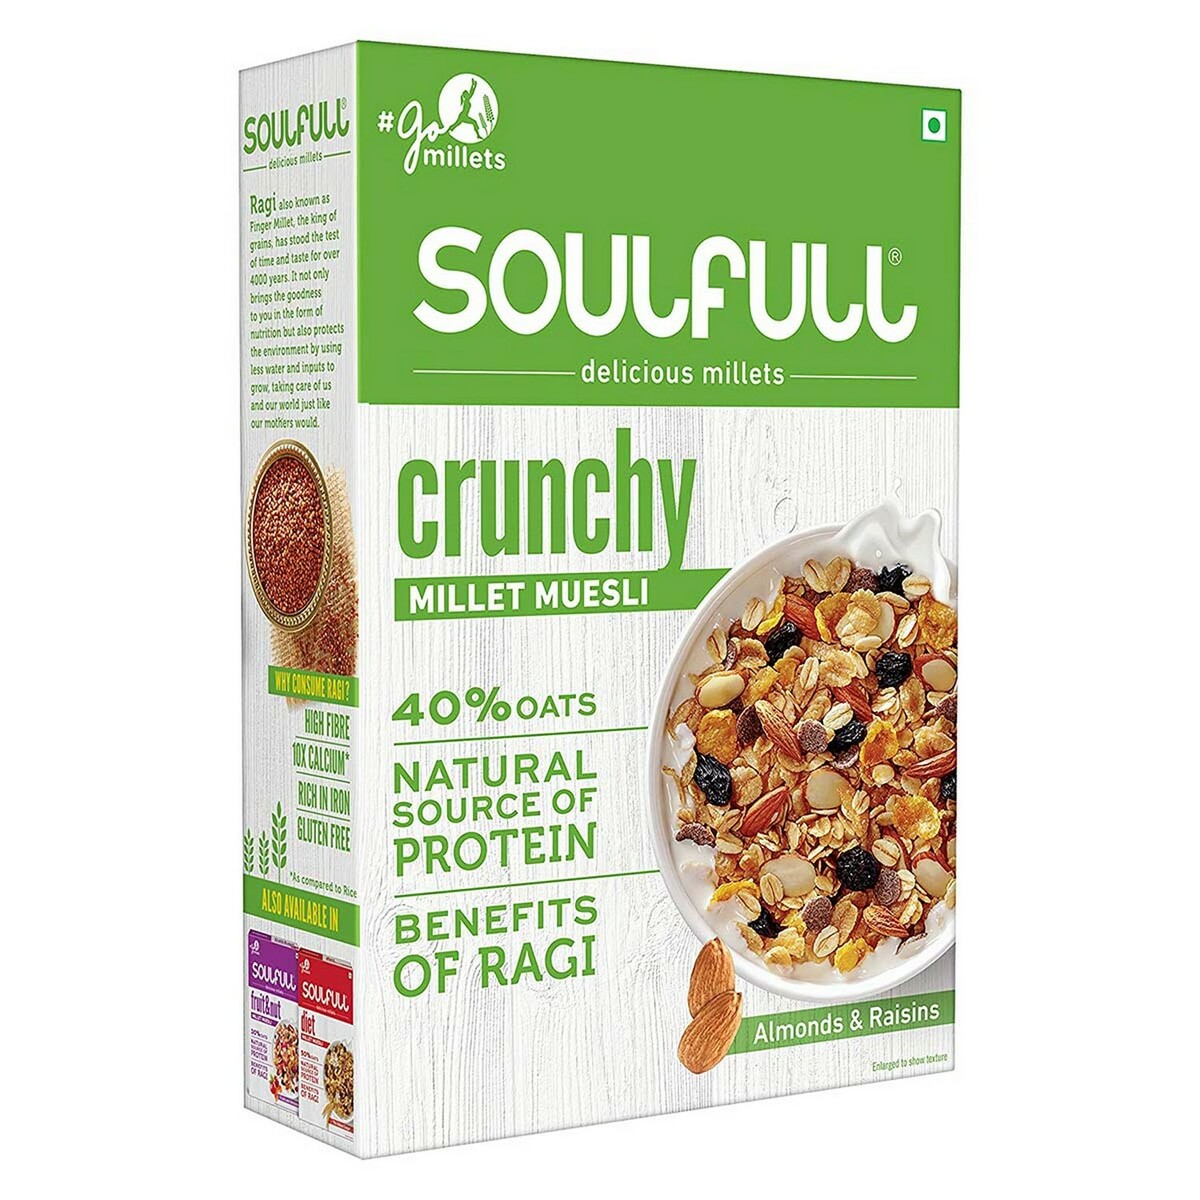 Soulfull Millet Muesli Crunchy 400g